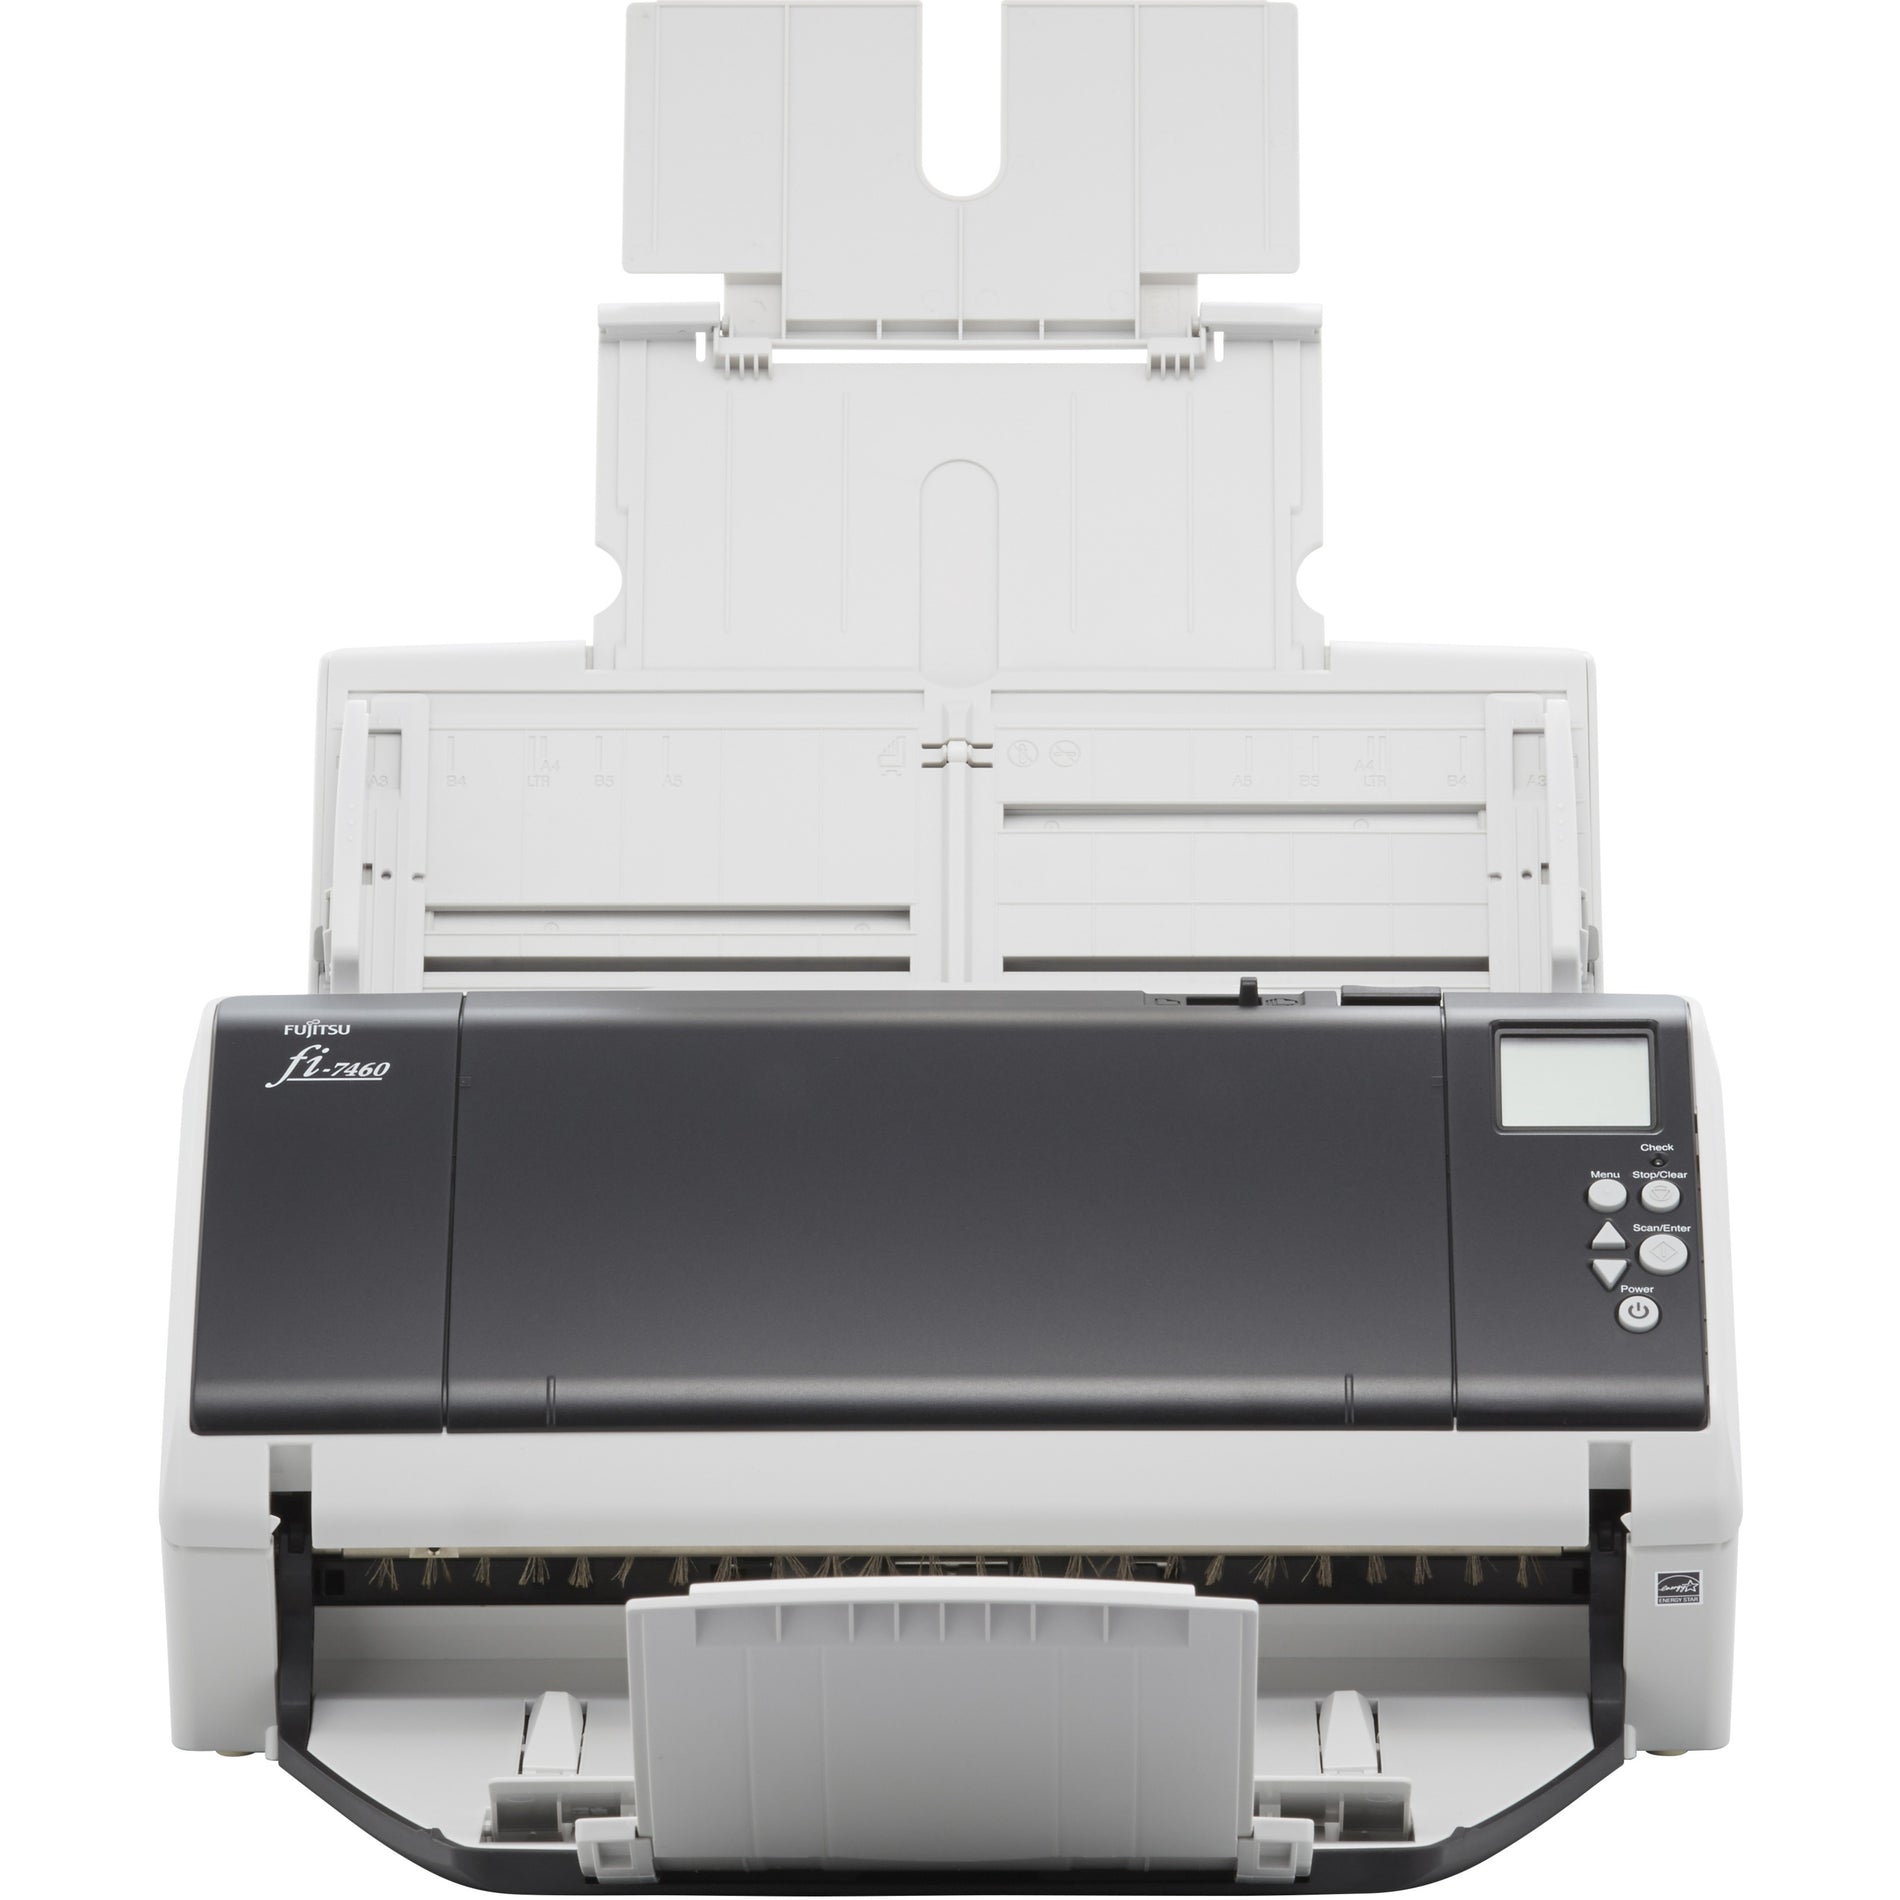 Fujitsu PA03710-B005 fi-7480 Sheetfed Scanner - High-Speed Color Scanning, 600 dpi Optical